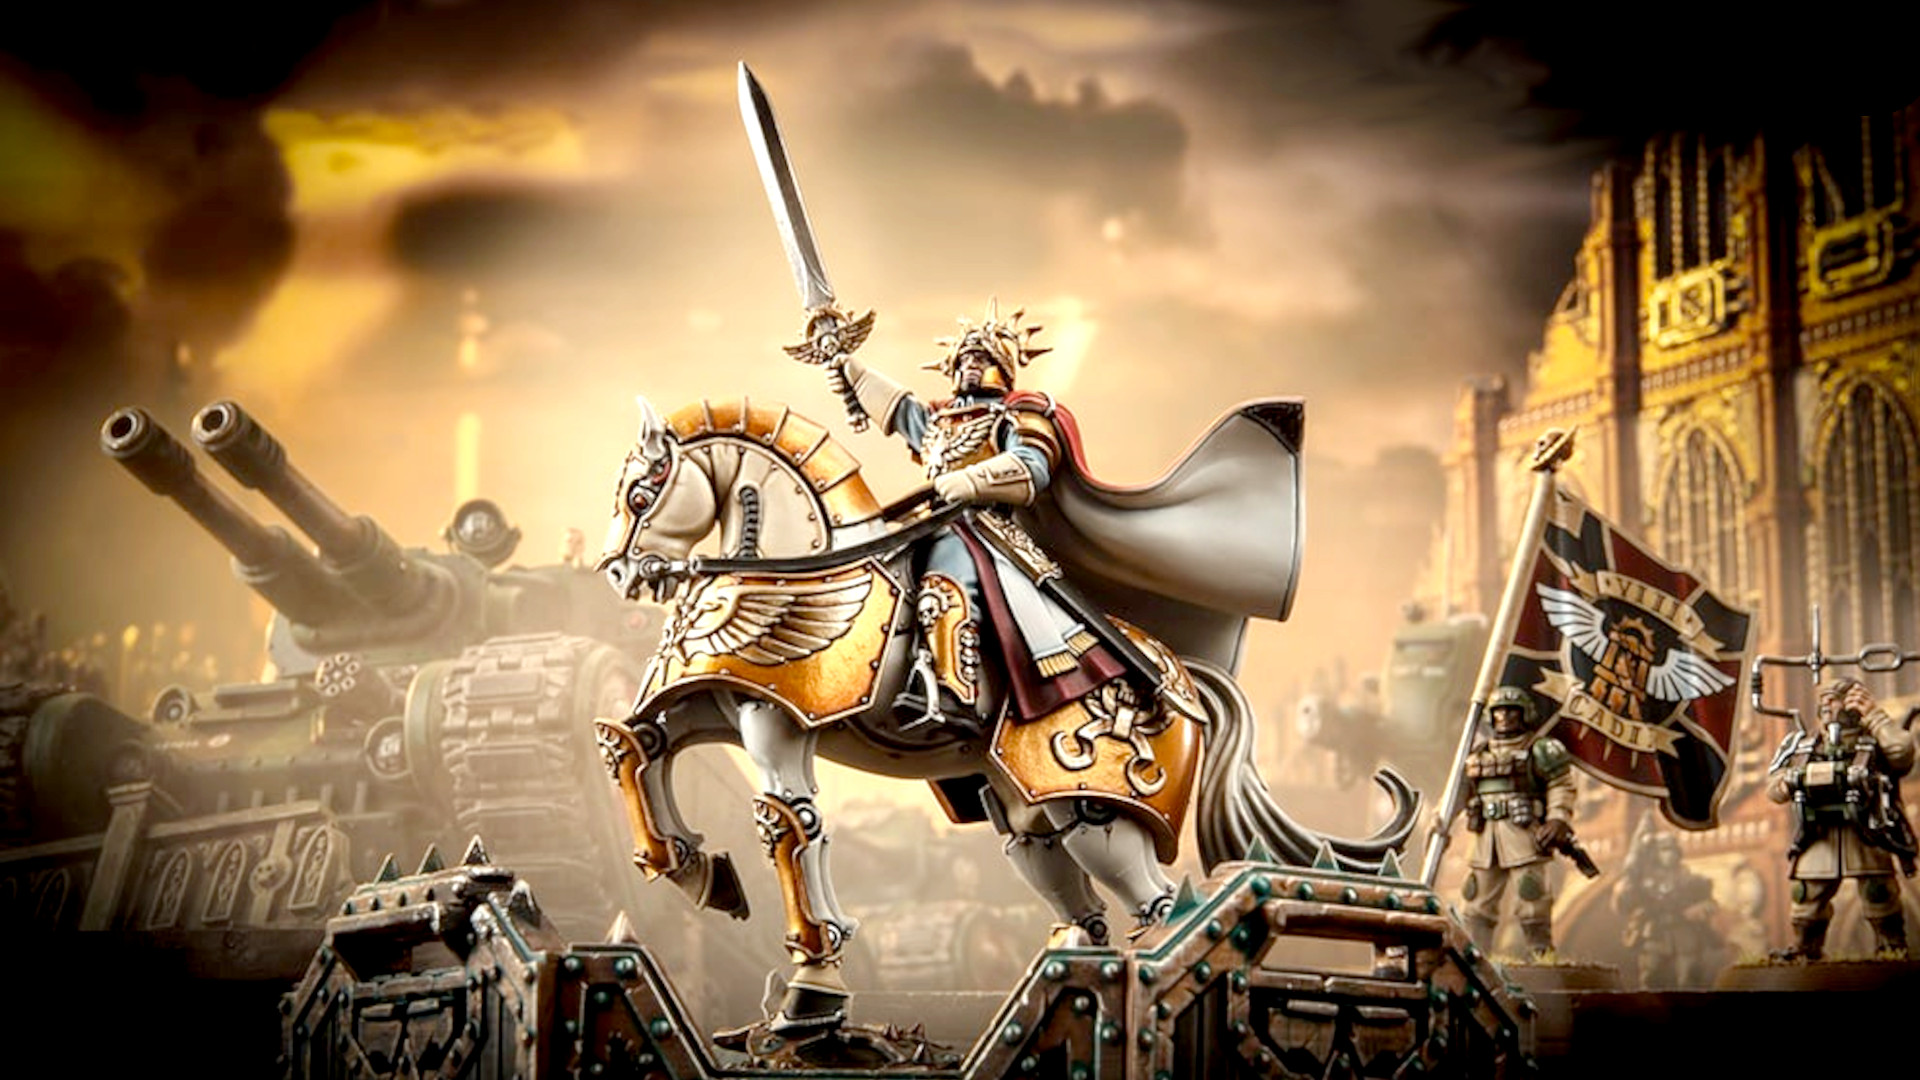 warhammer-40k-imperial-guard-lord-solar-leontus-model-battlefield-background.jpg